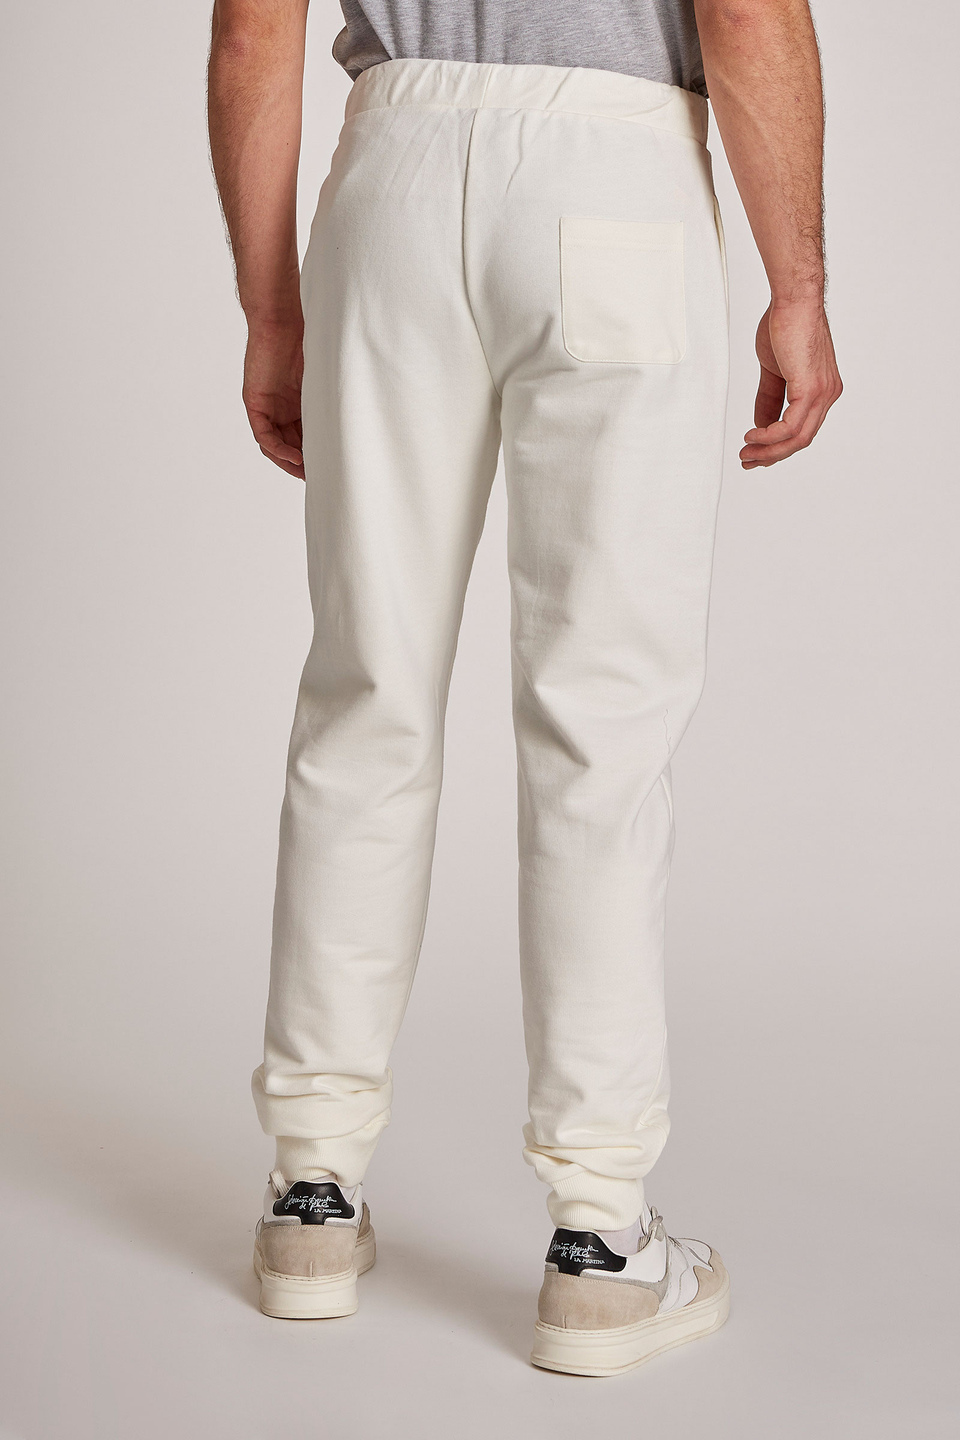 Pantalone da uomo regular fit | La Martina - Official Online Shop